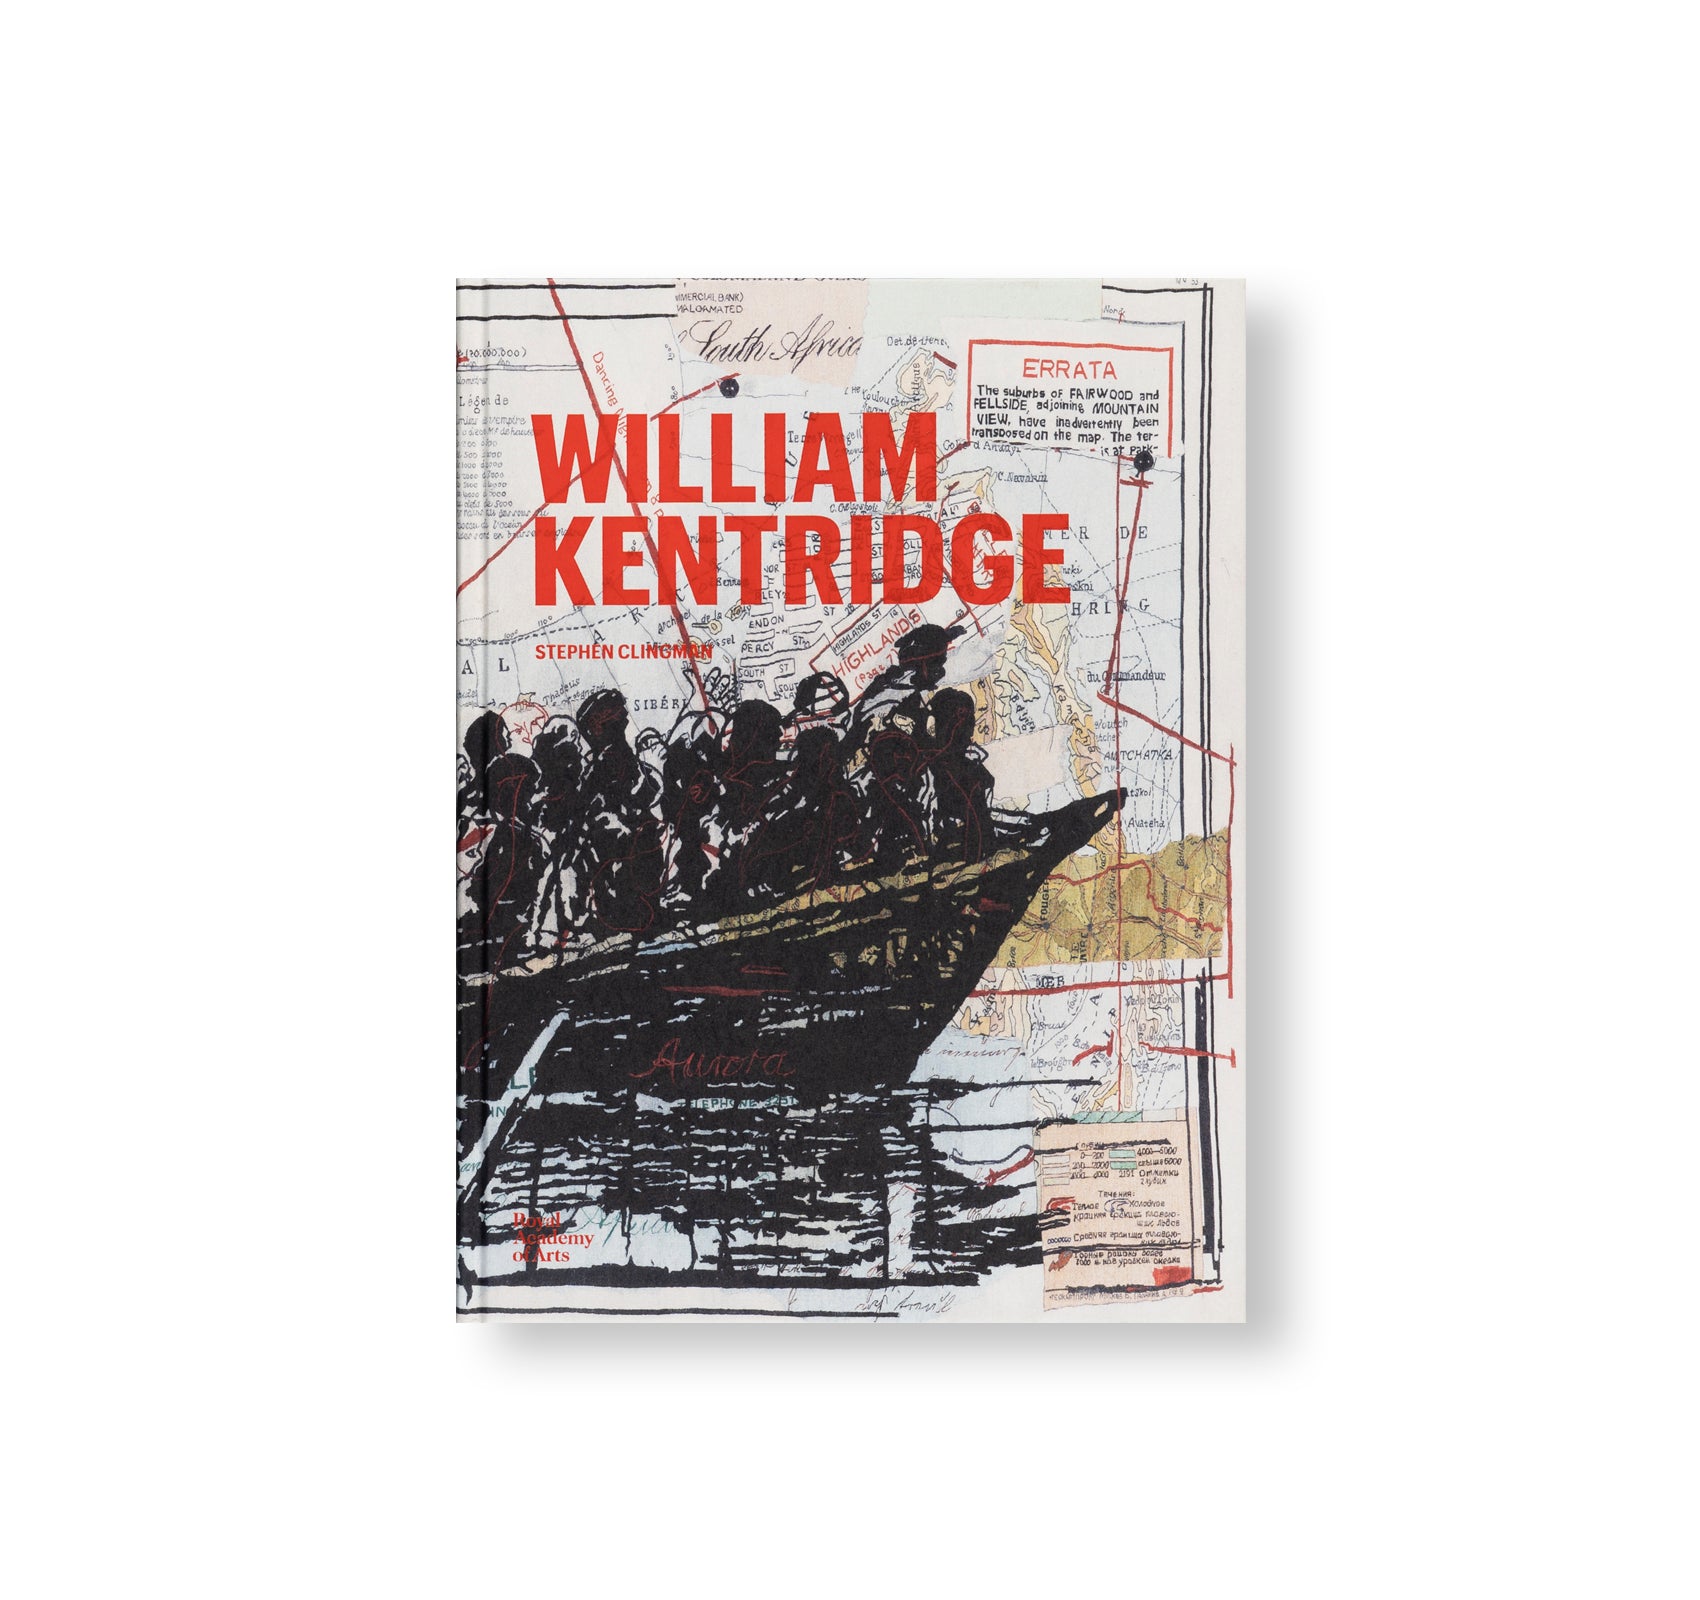 WILLIAM KENTRIDGE by William Kentridge